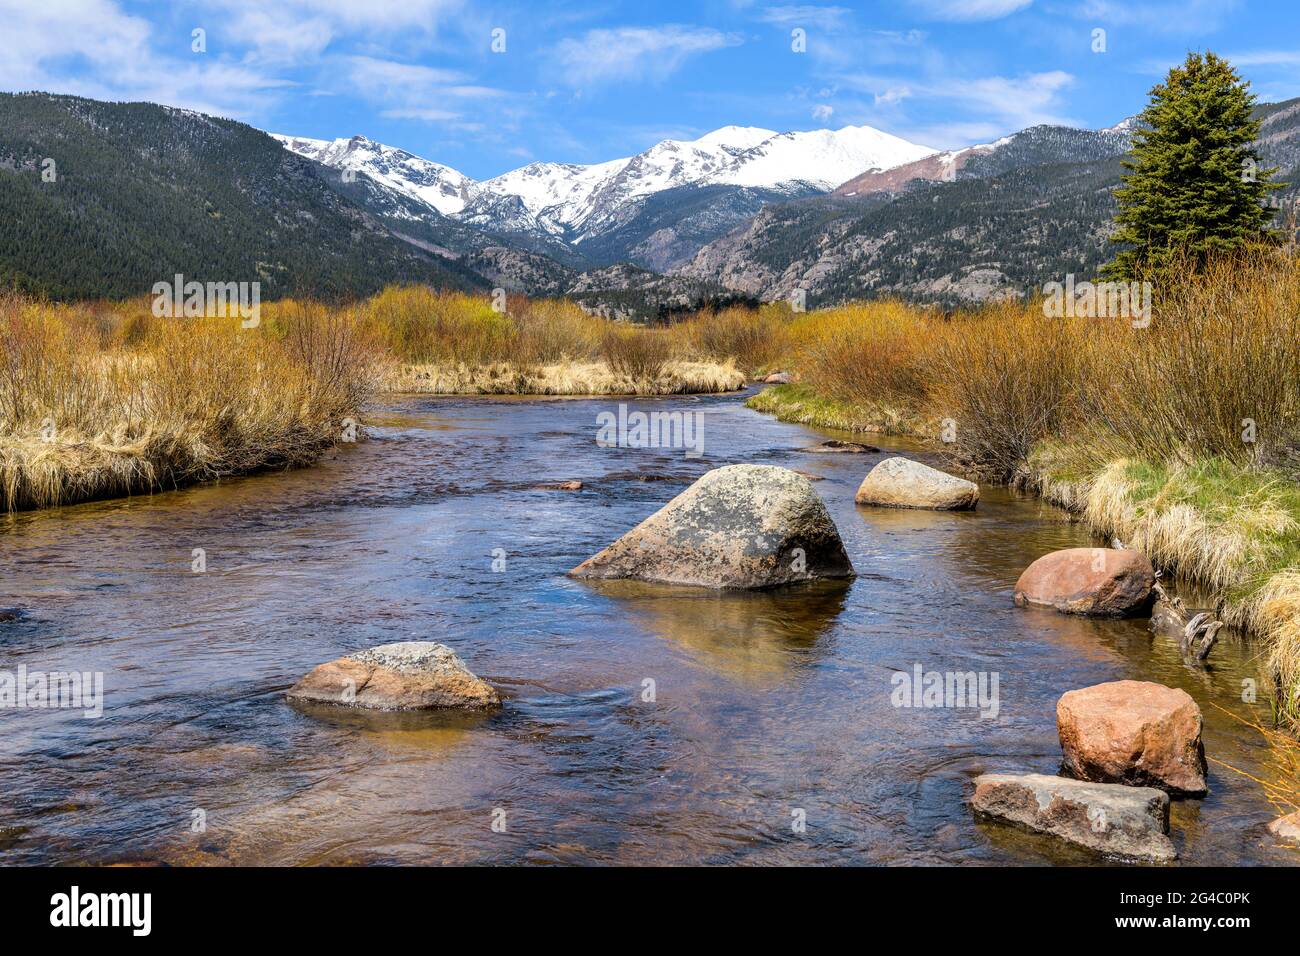 Spring Mountain Creek - EINE Frühlingsansicht des Big Thompson River im Moraine Park im Rocky Mountain National Park, Colorado, USA. Stockfoto